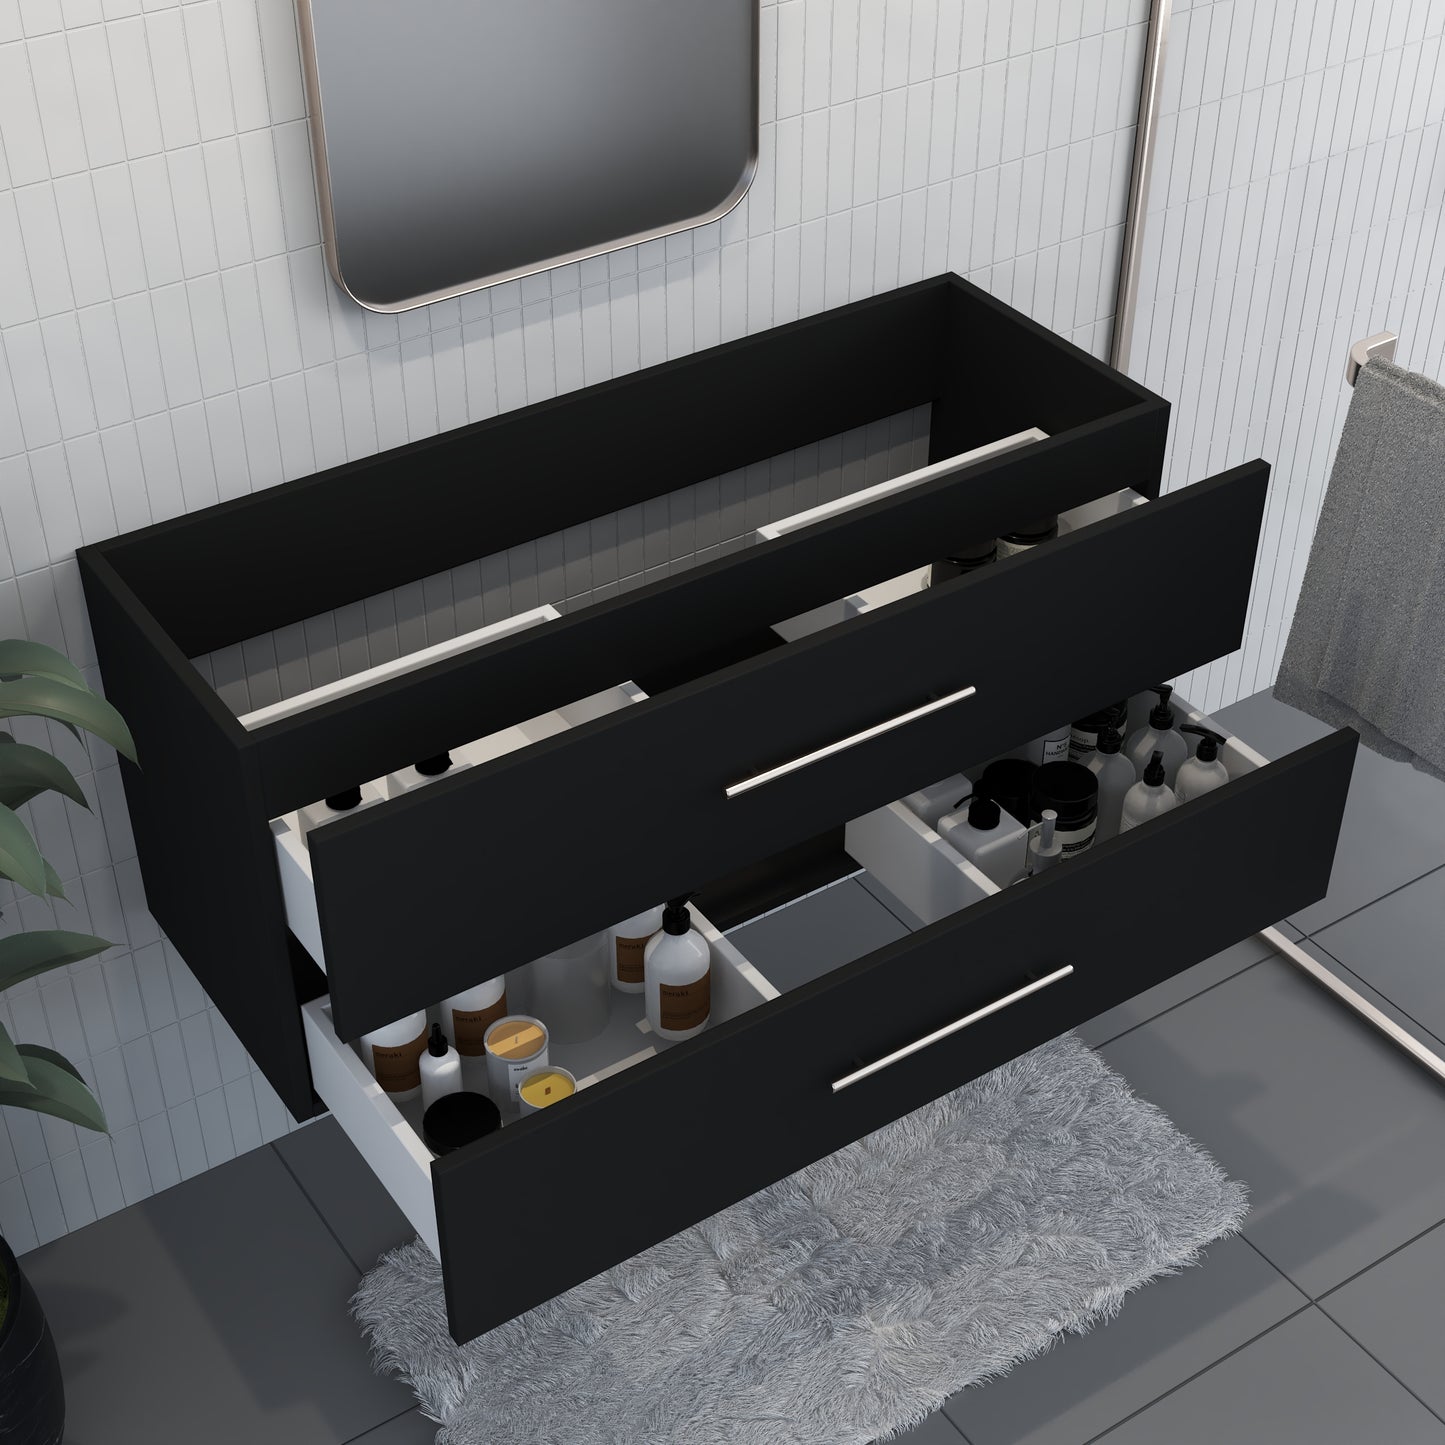 Napa 48" Bathroom Vanity Cabinet Only